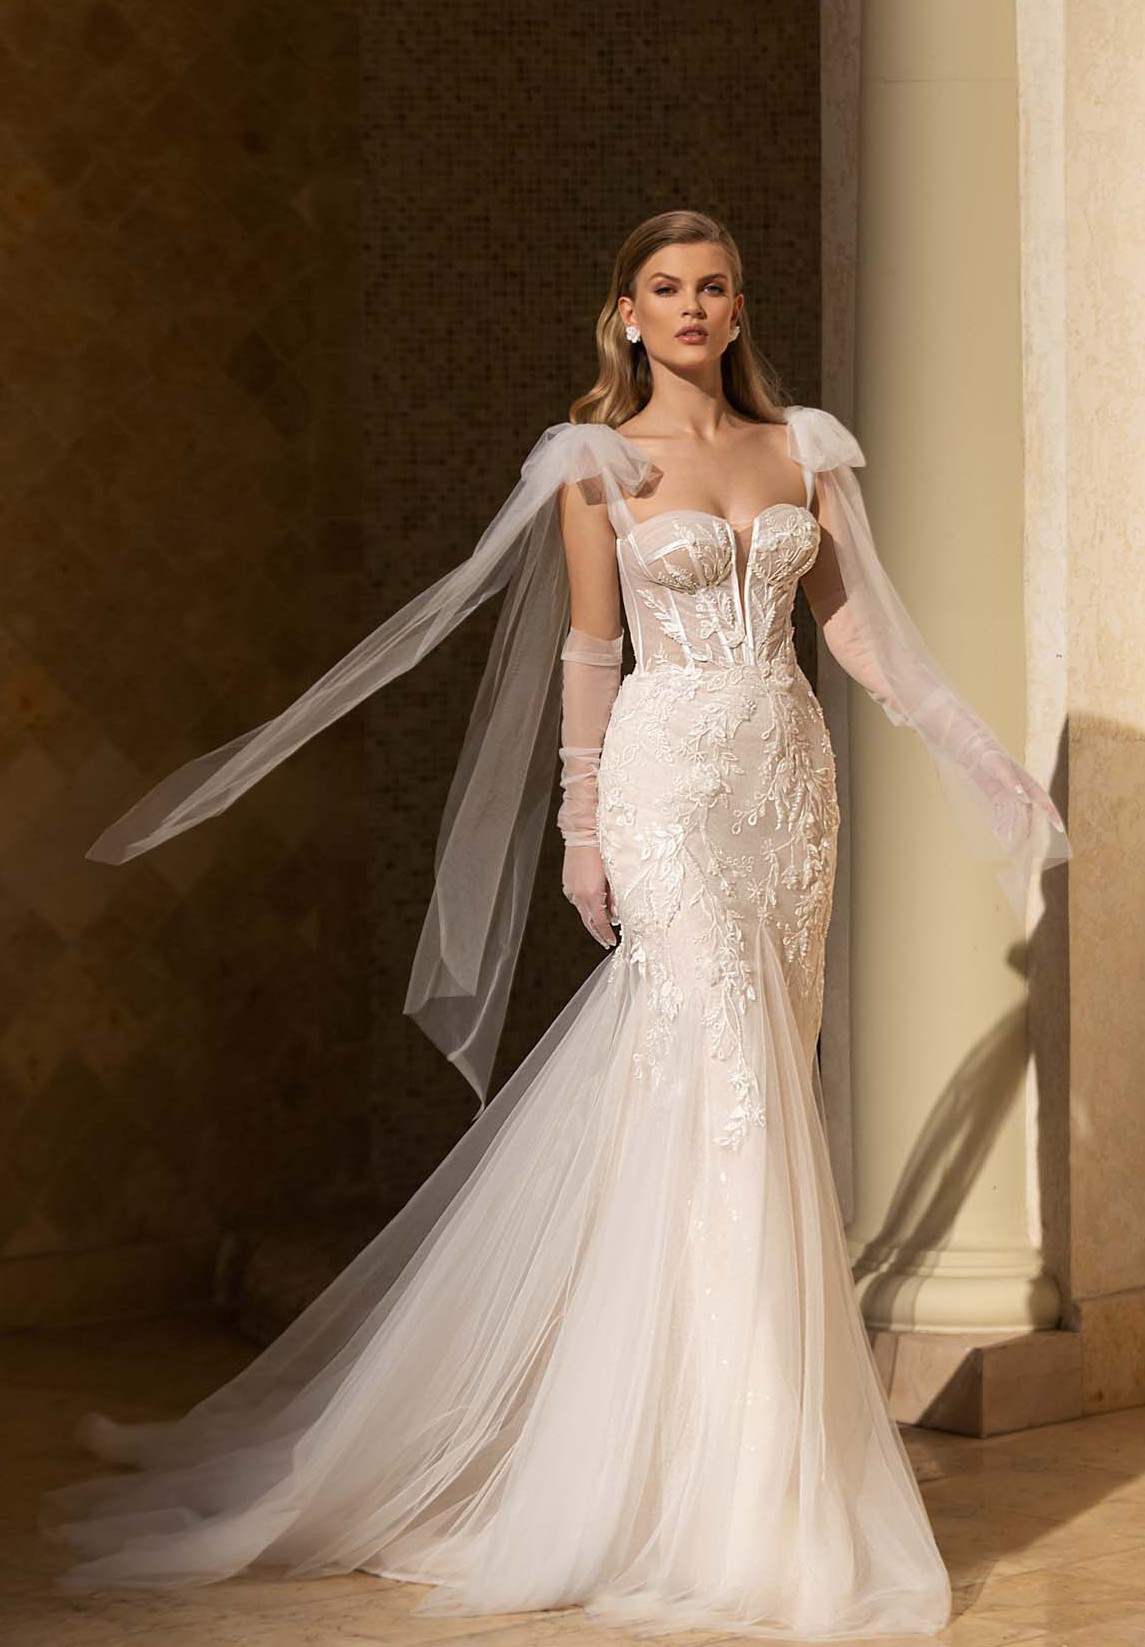 Monreal Tina Sample Wedding Dress Save 57% - Stillwhite